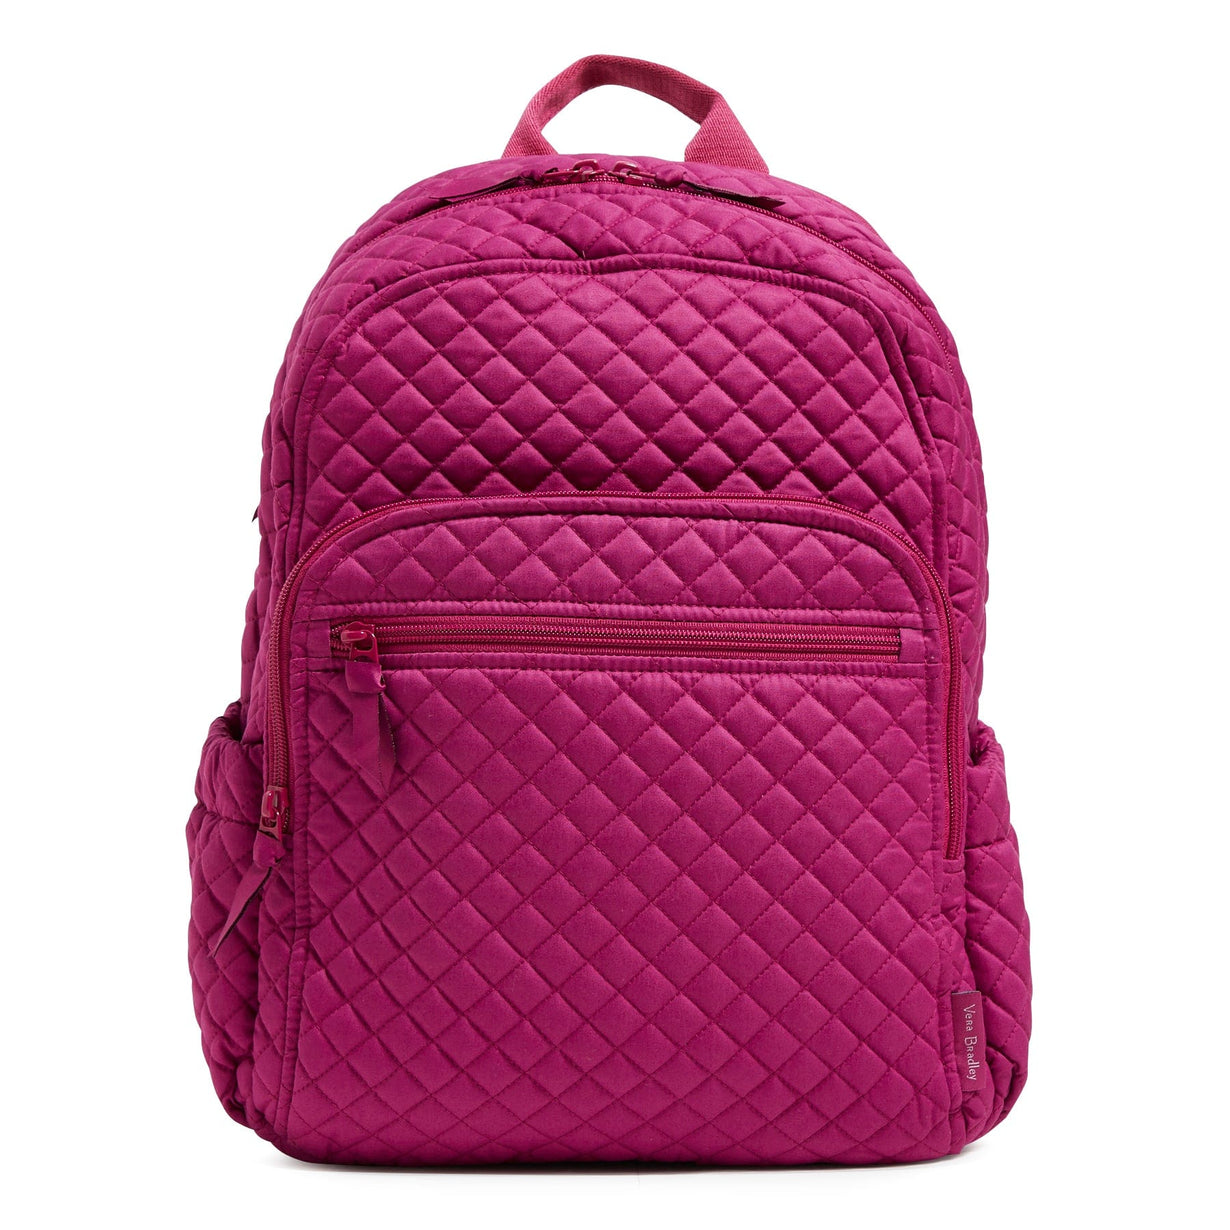 vera bradley school backpack in quilted raspberry fabric